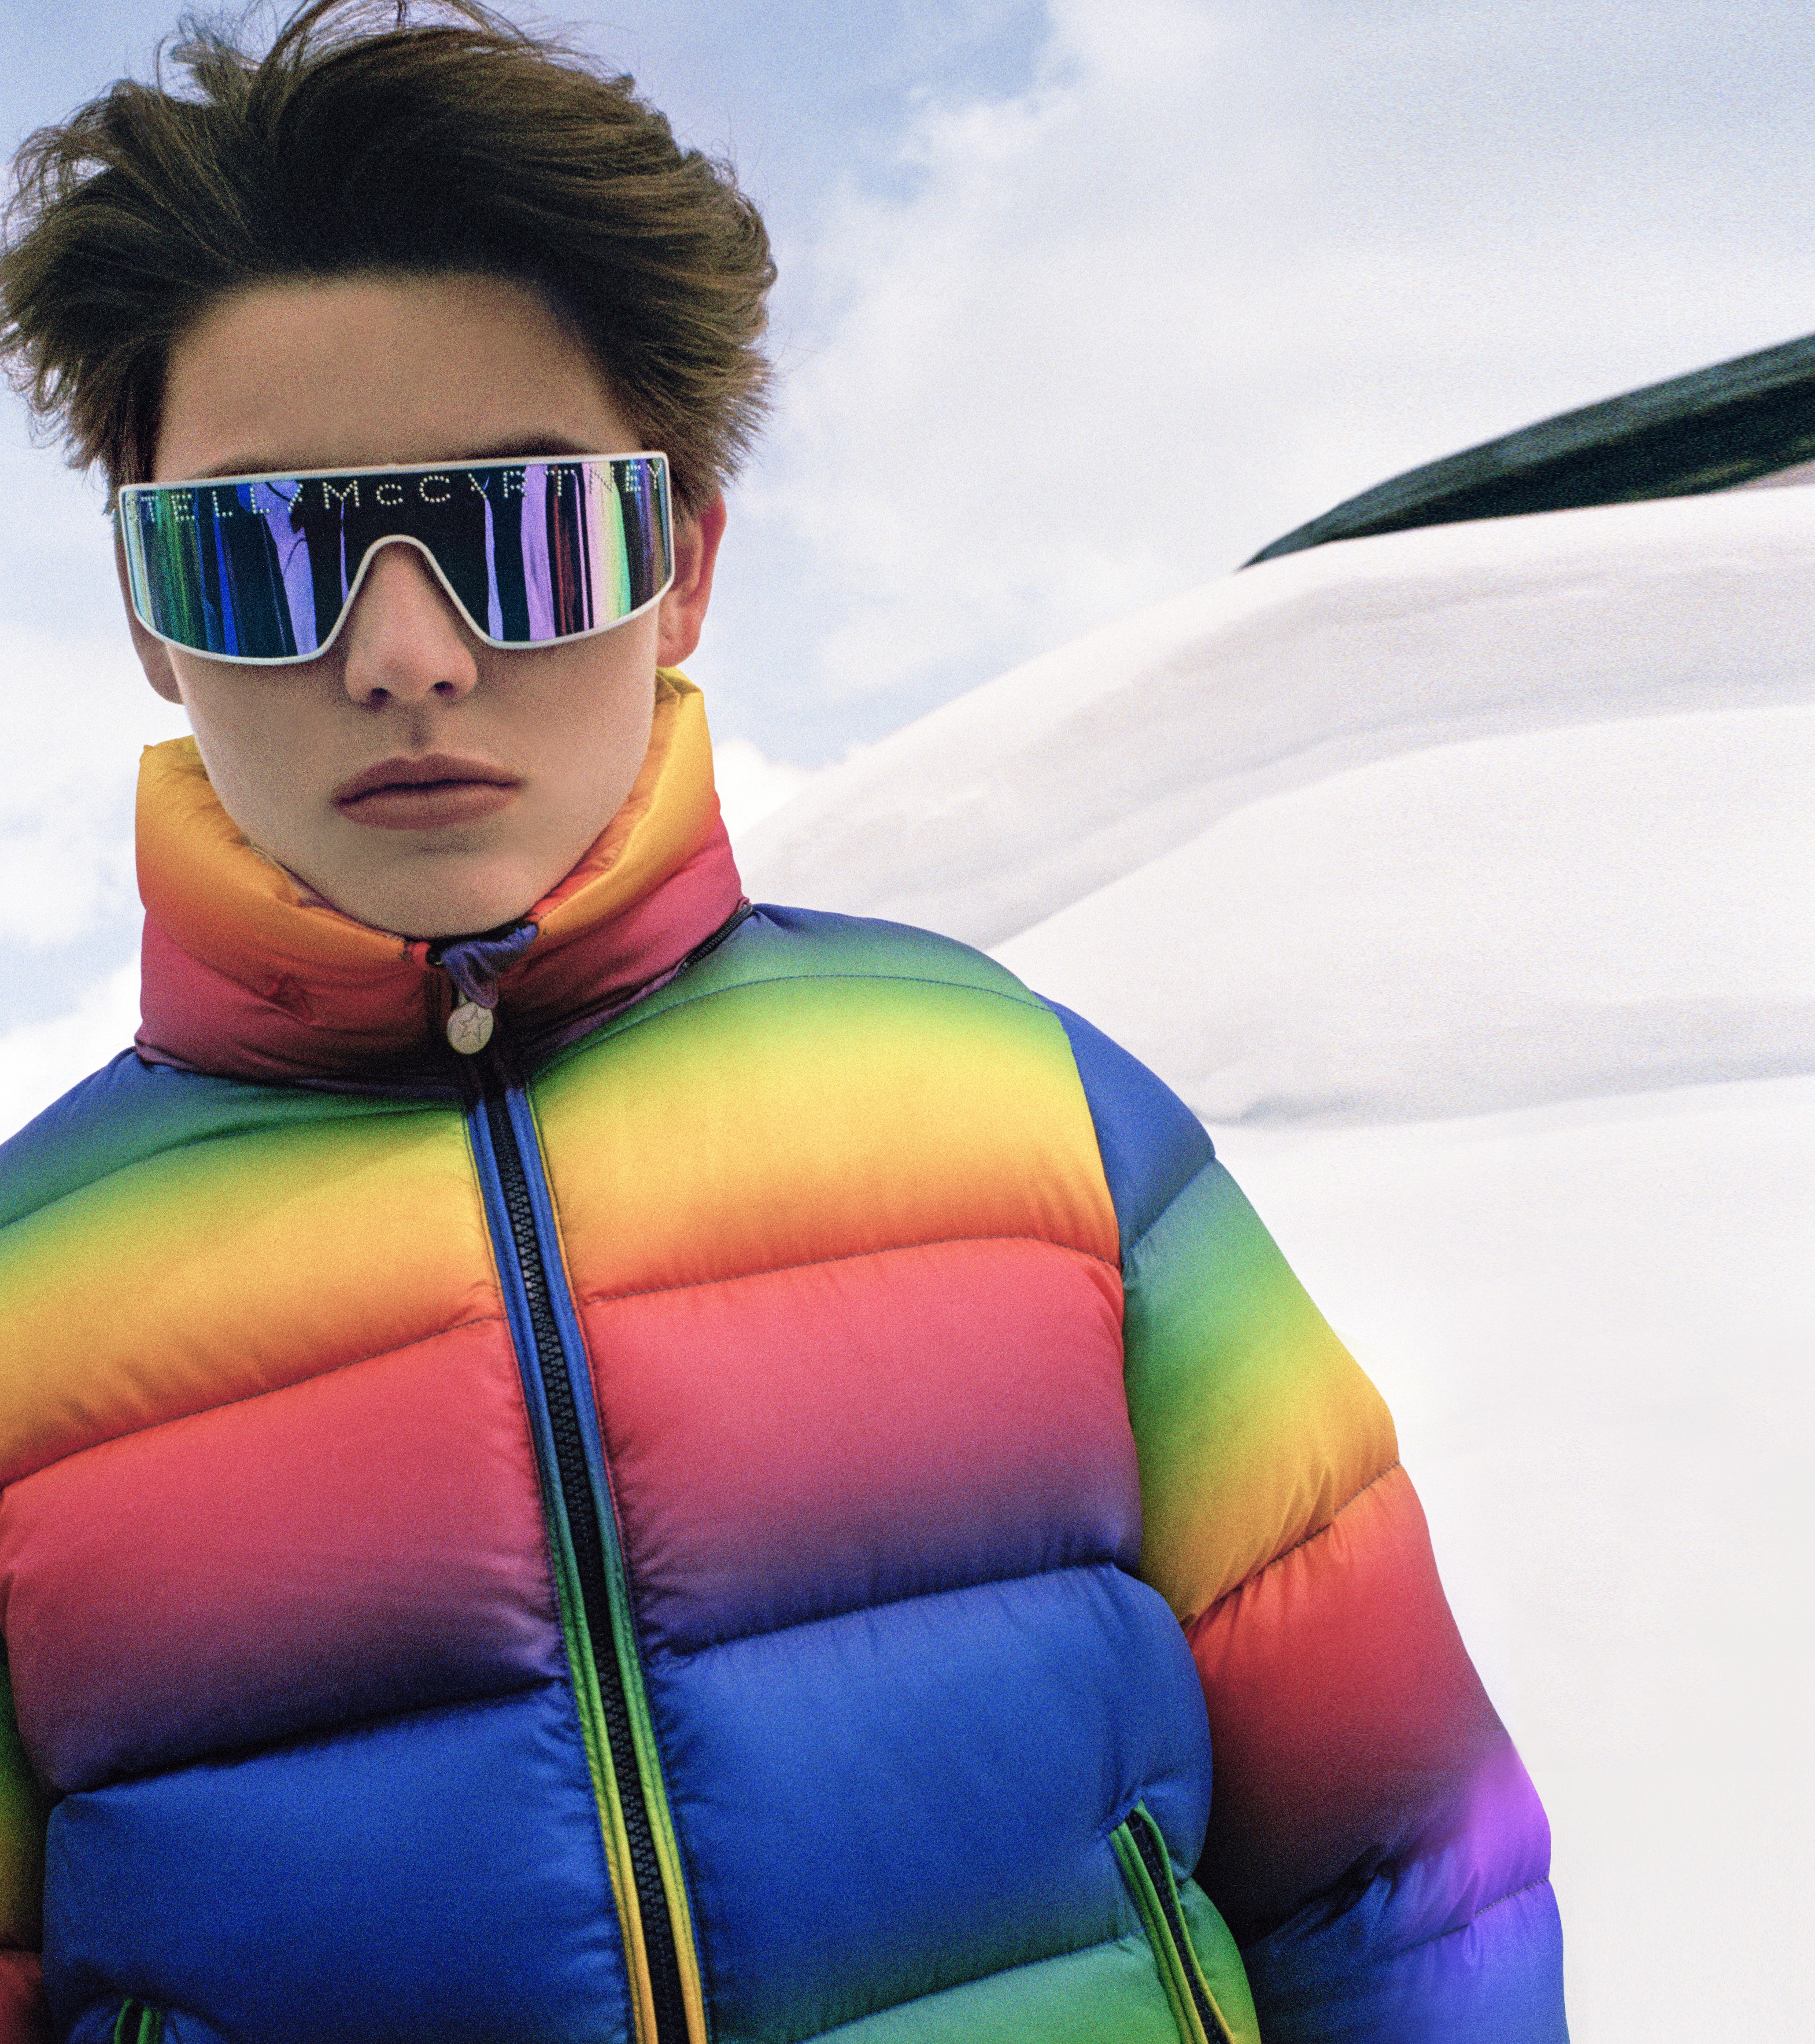 Shop Designer Ski Clothes to Sport While on the Slopes